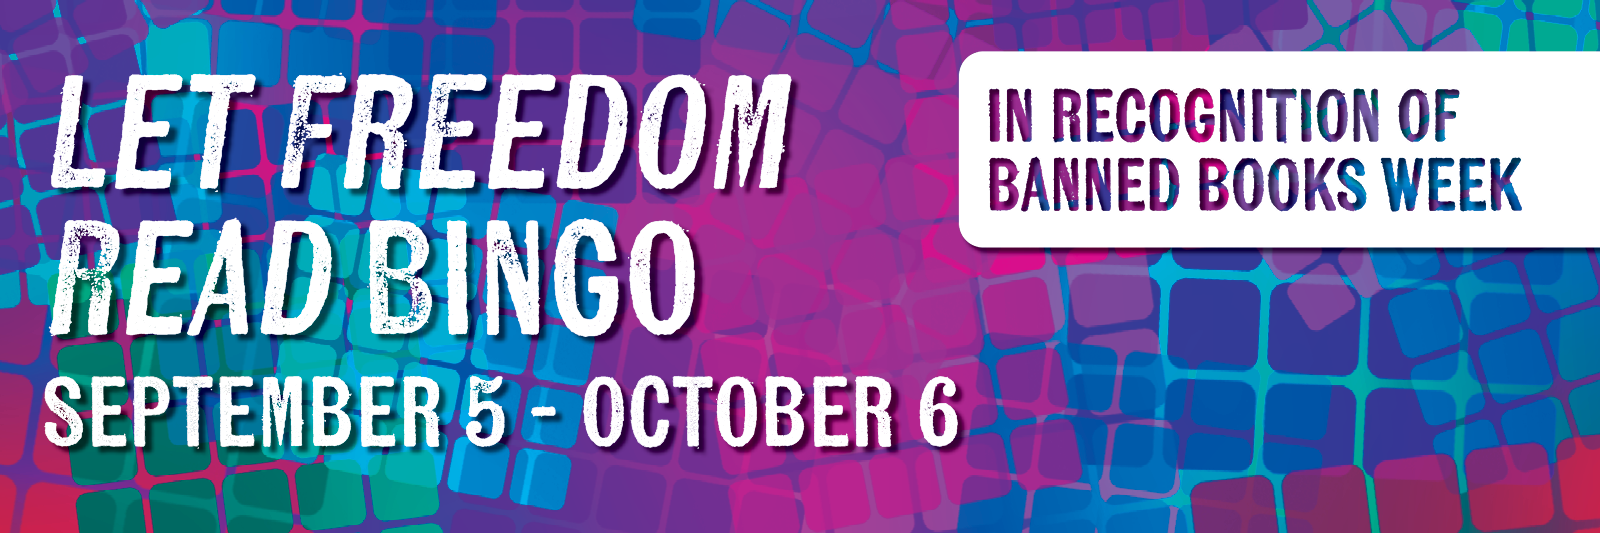 Let Freedom Read Bingo from September 5- October 6